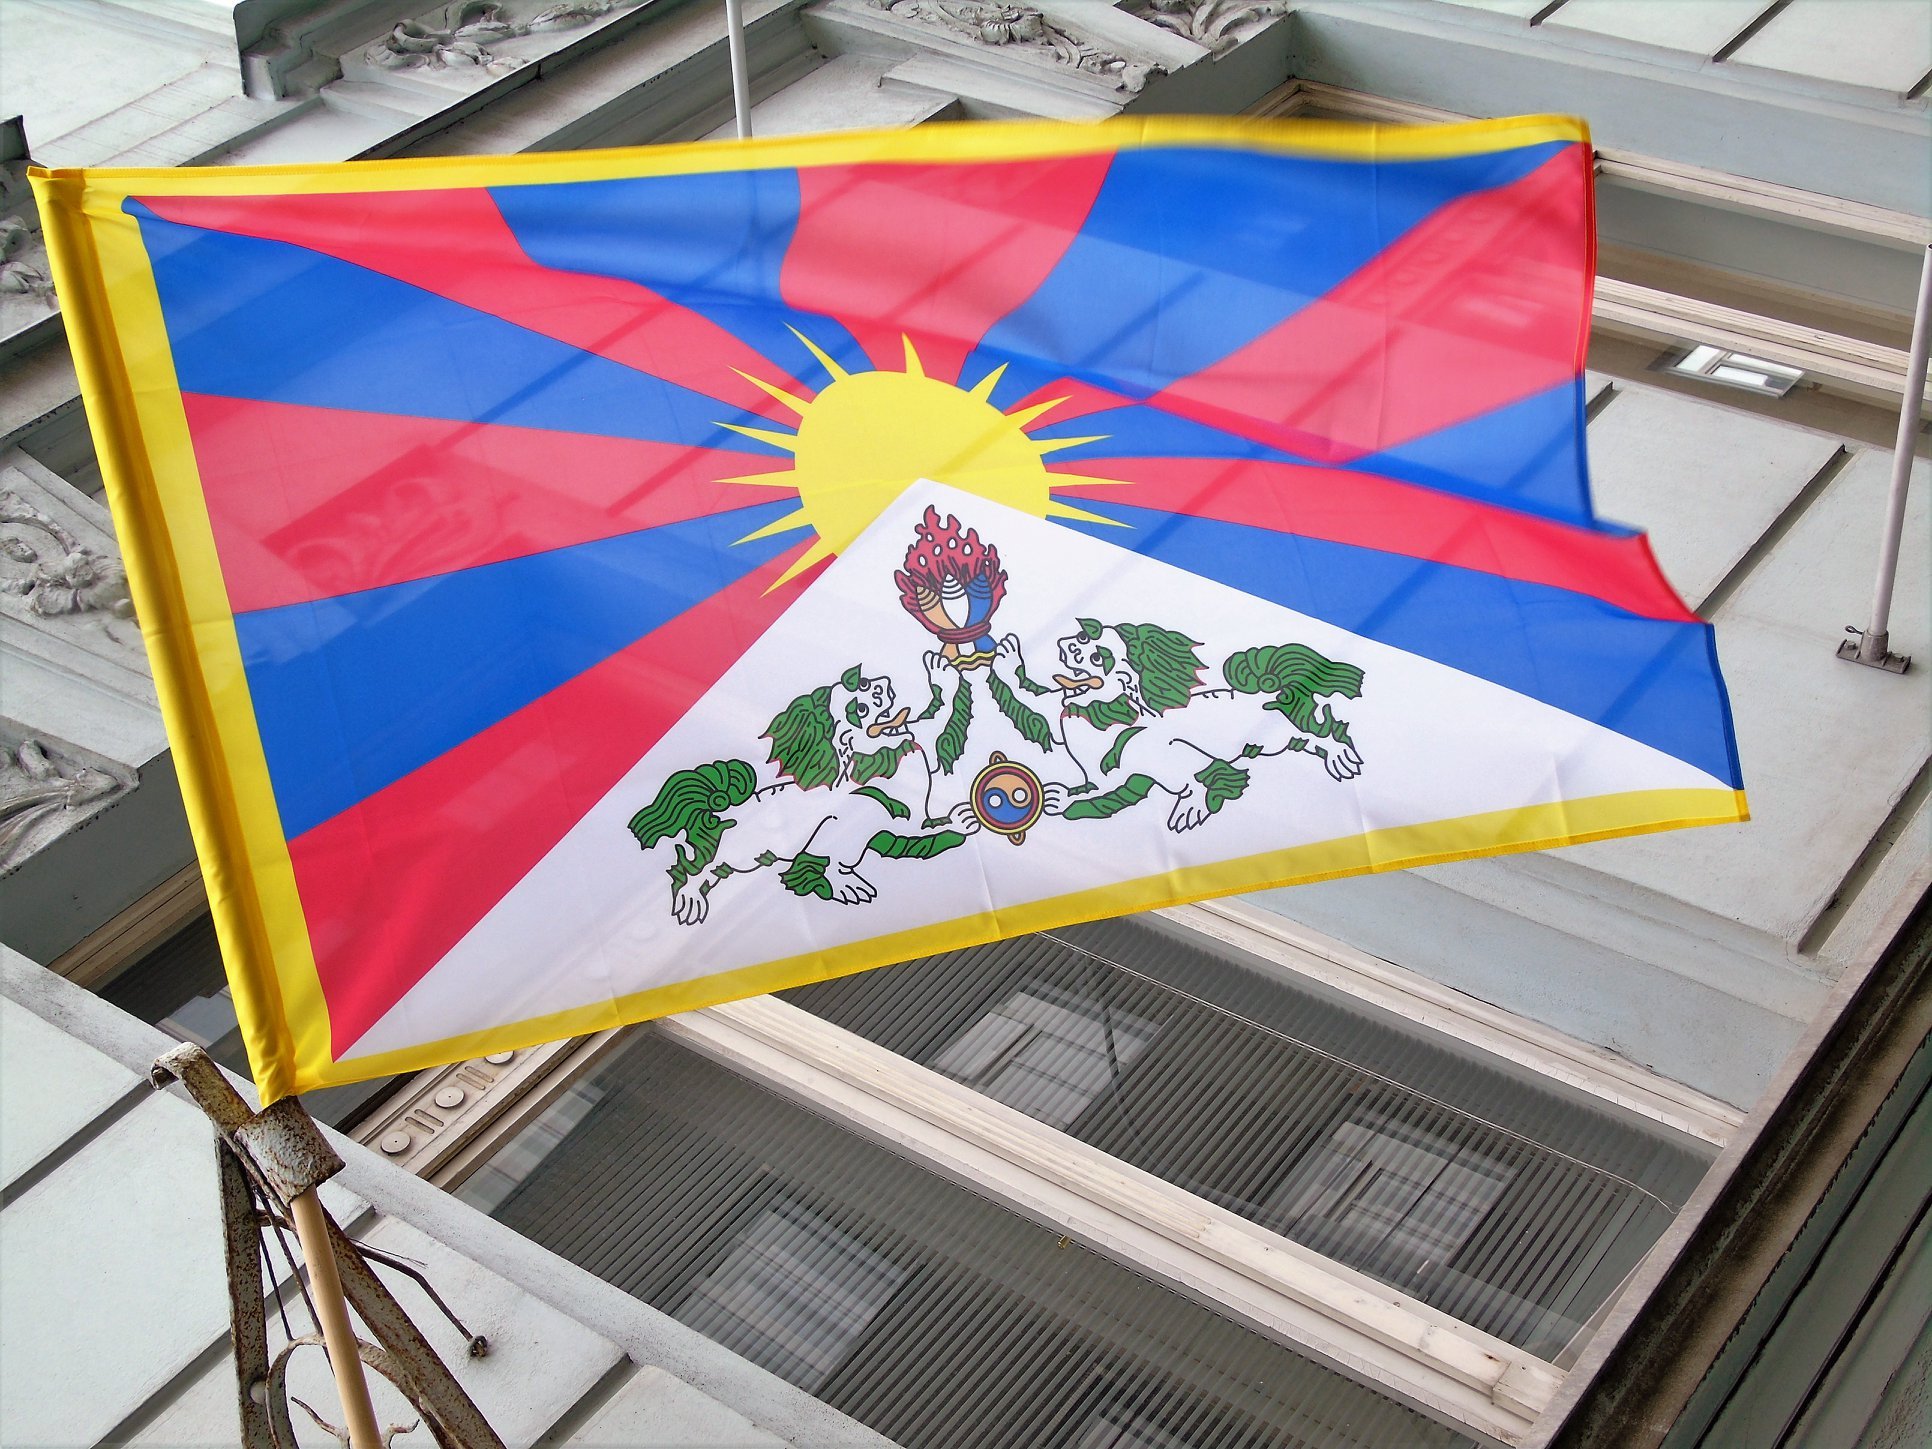 Tibet porobený, Tibet zneužívaný. Jeho poselství ale zůstává